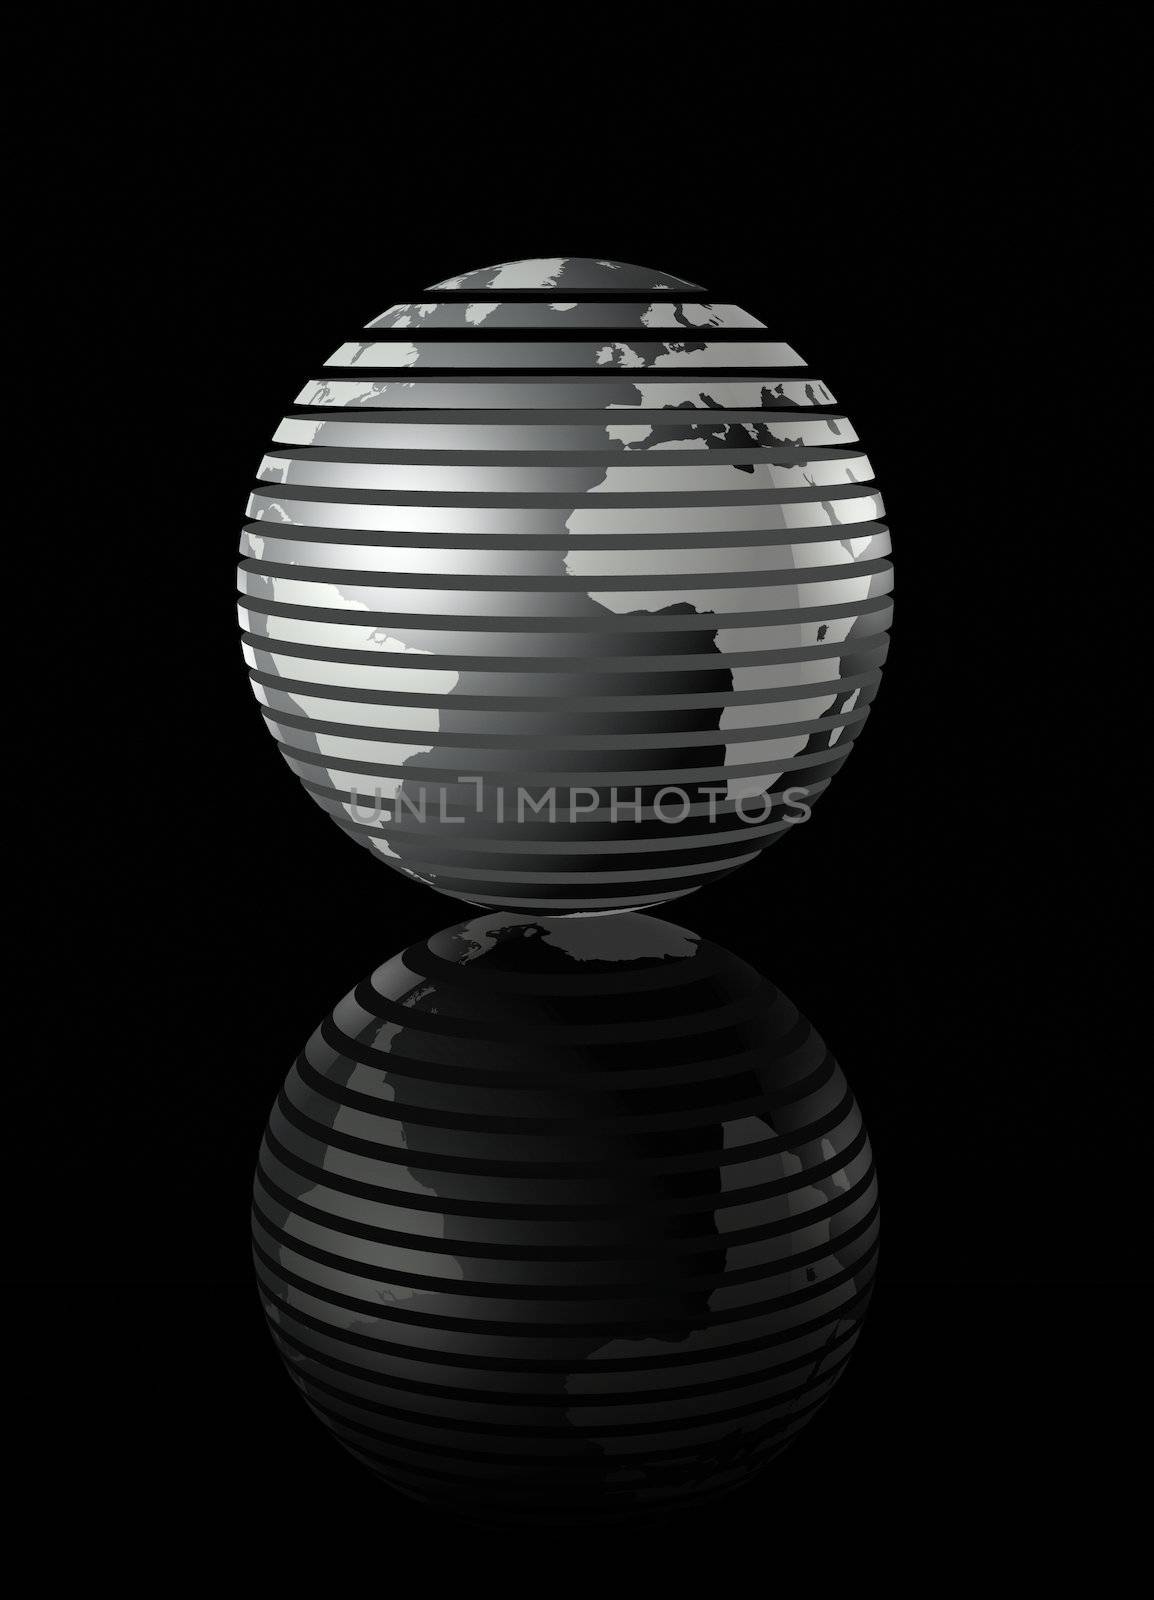 metal glossy earth globe on black background - three dimensional illustration